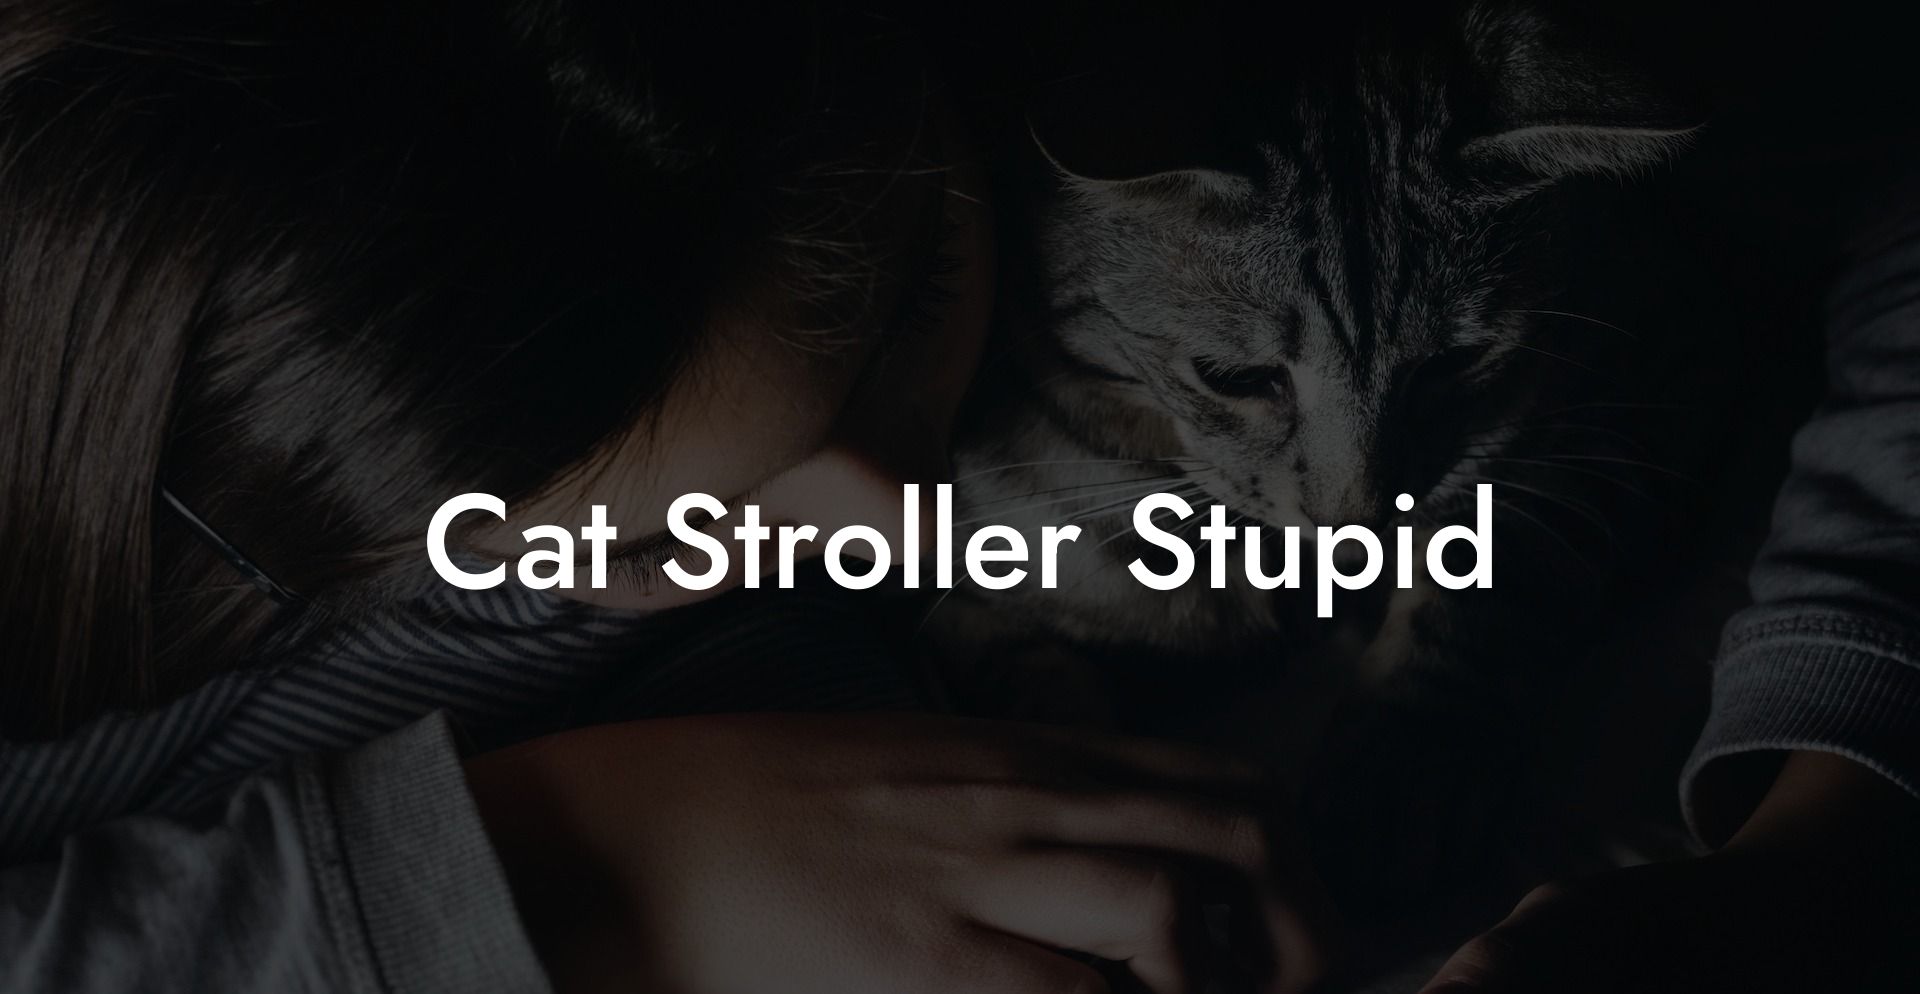 Cat Stroller Stupid